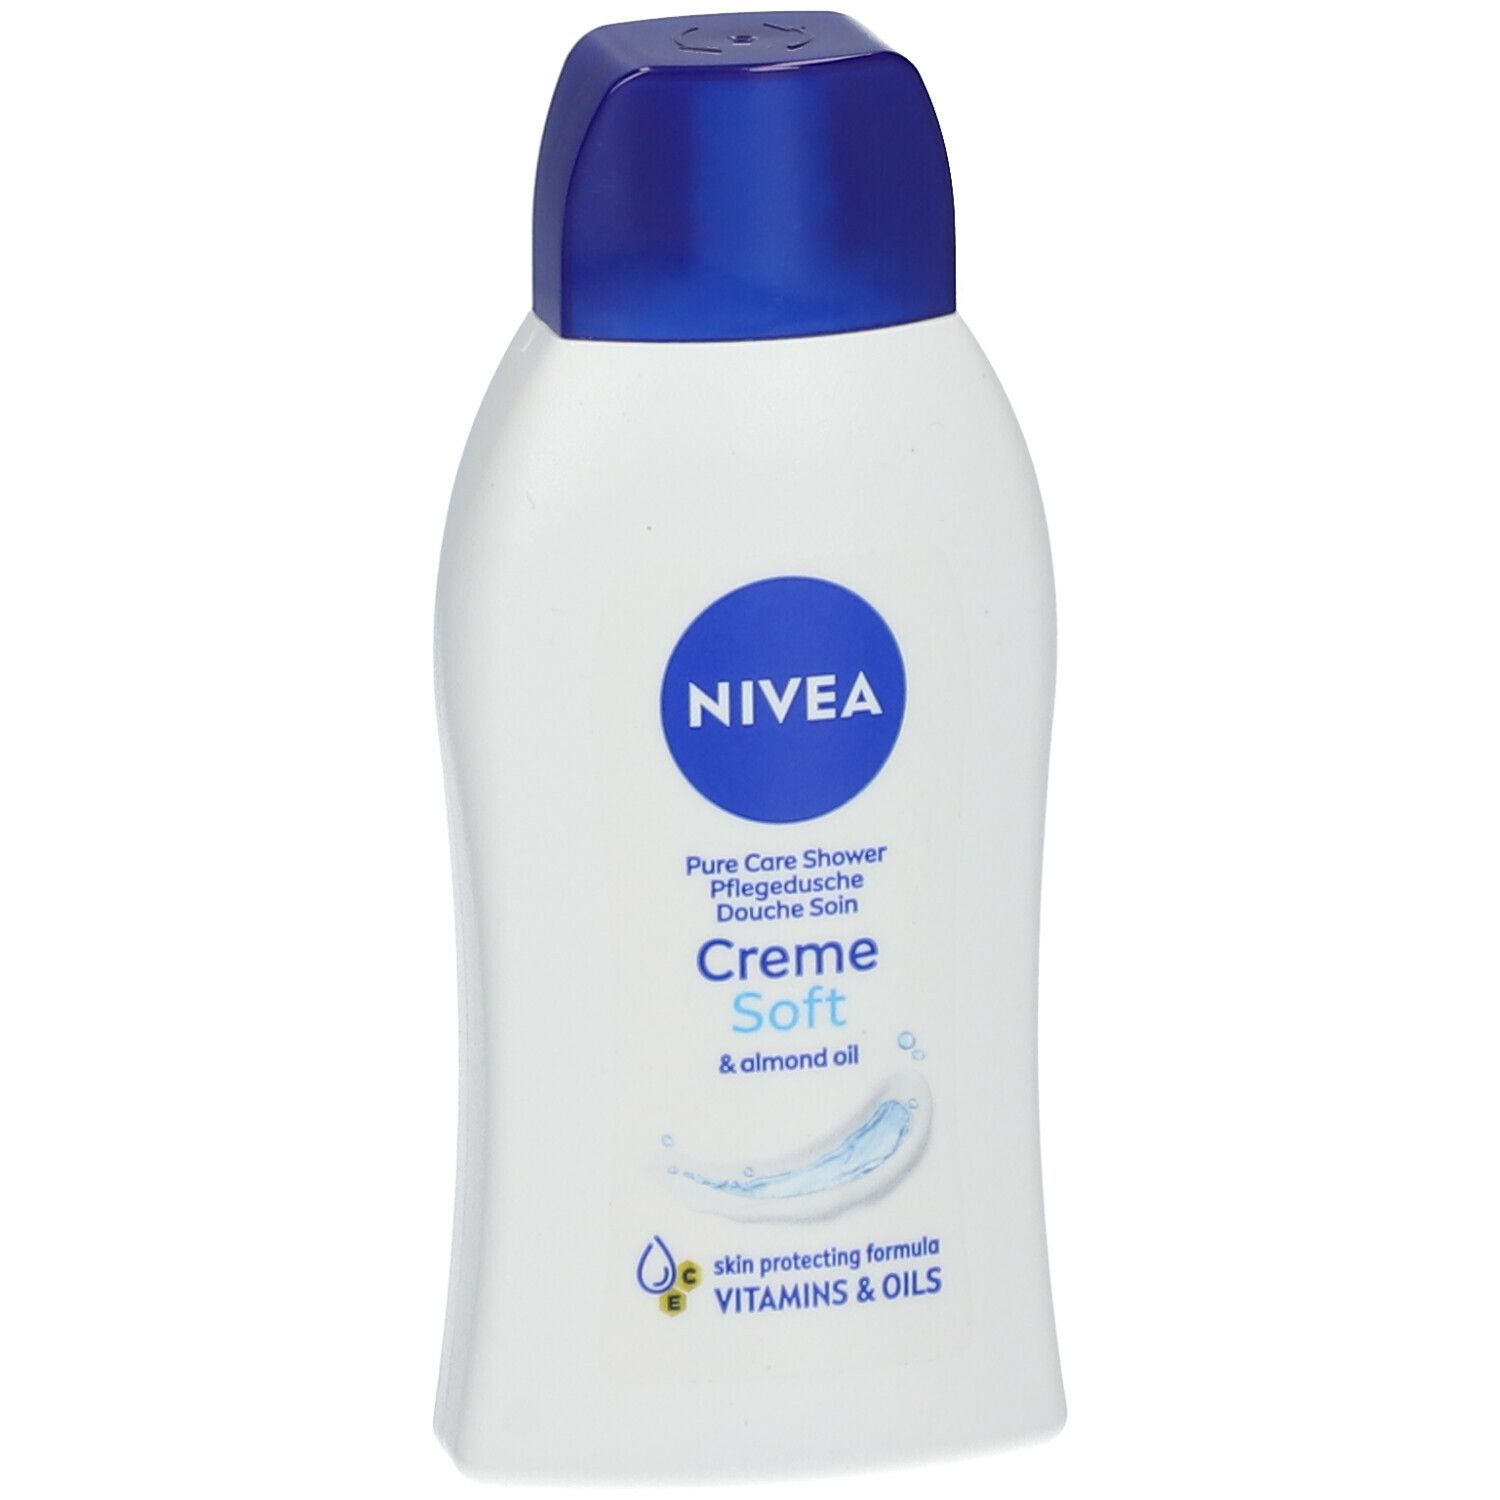 NIVEA® creme soft Cremedusche